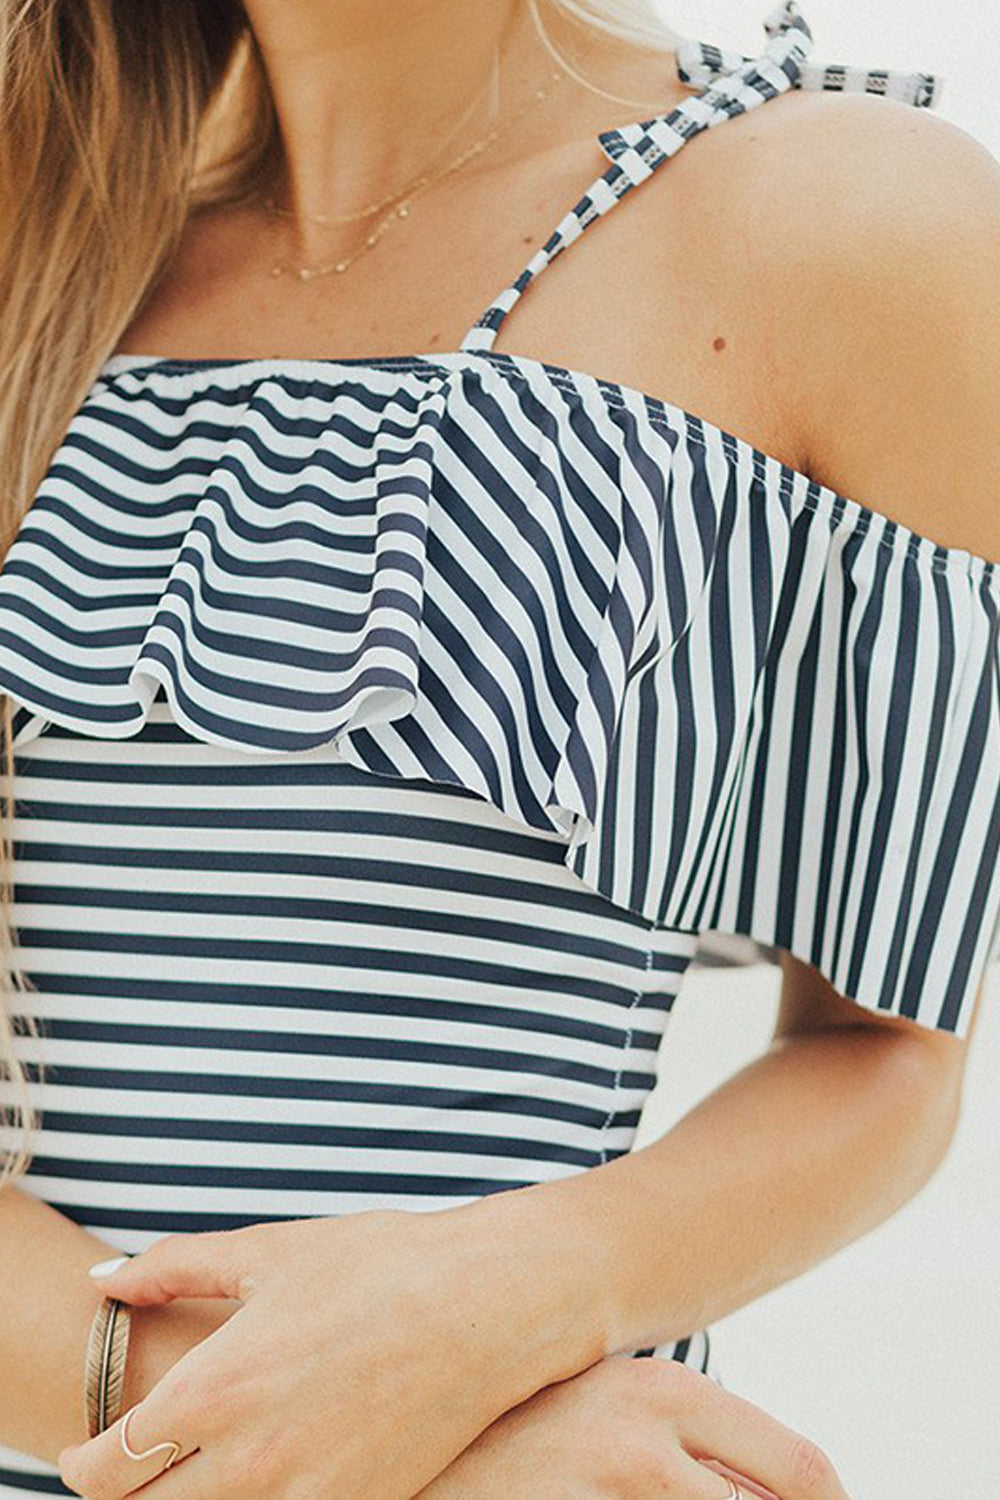 Iyasson Stripe Printing Falbala One-piece Swimsuit